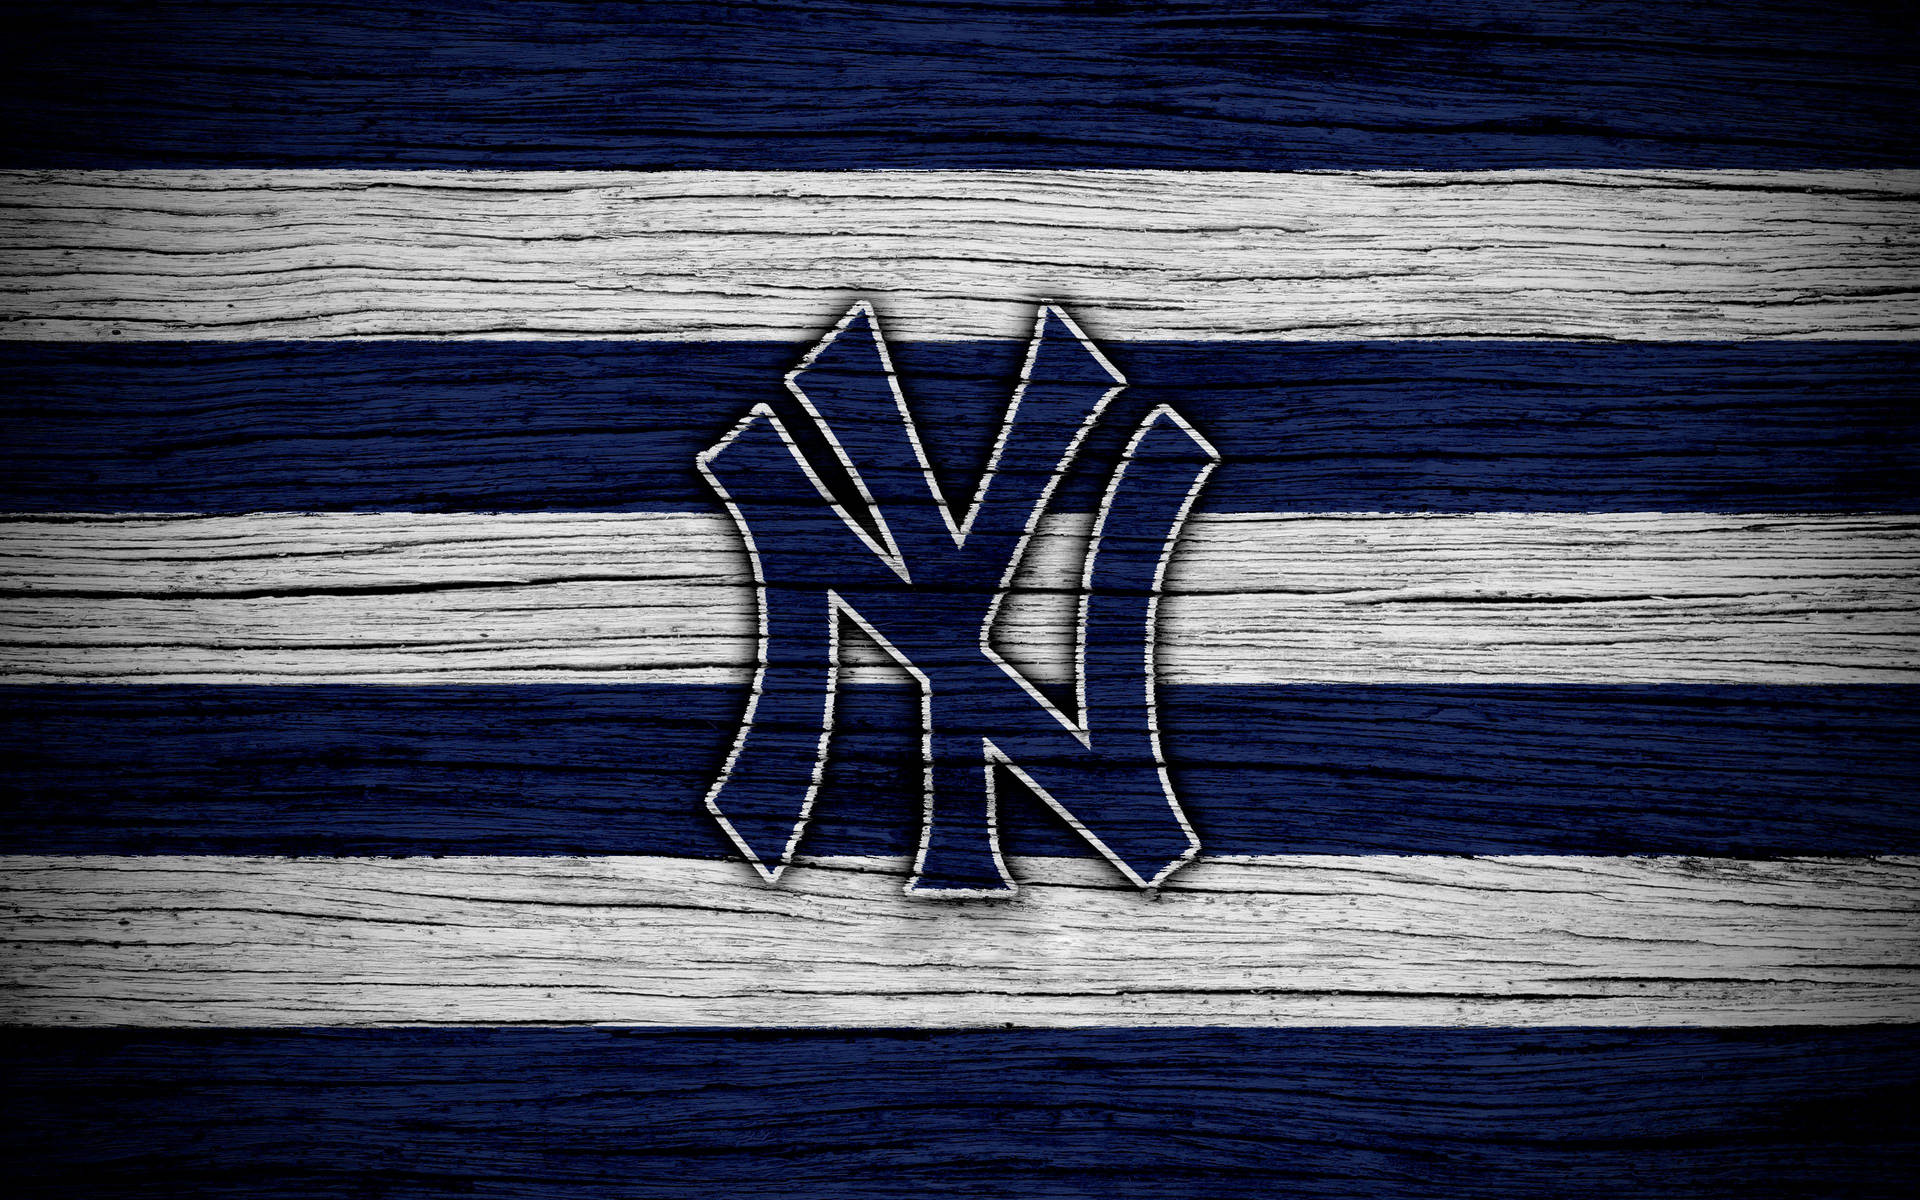 NY Yankees Wallpaper  Yankees wallpaper, Baseball wallpaper, New york  yankees logo